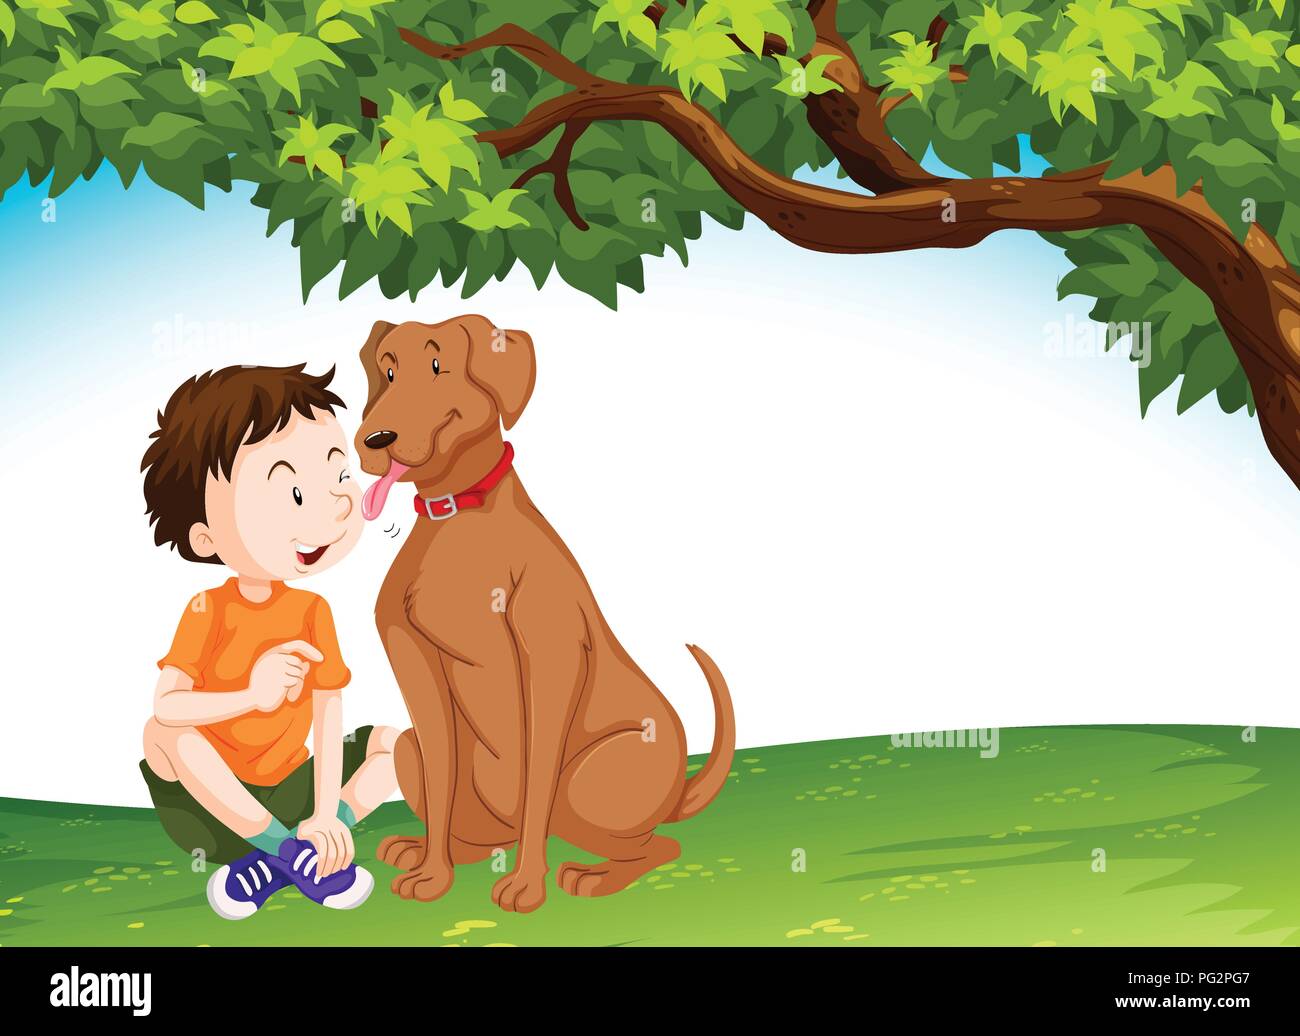 Dog licking young boy illustration Stock Vector